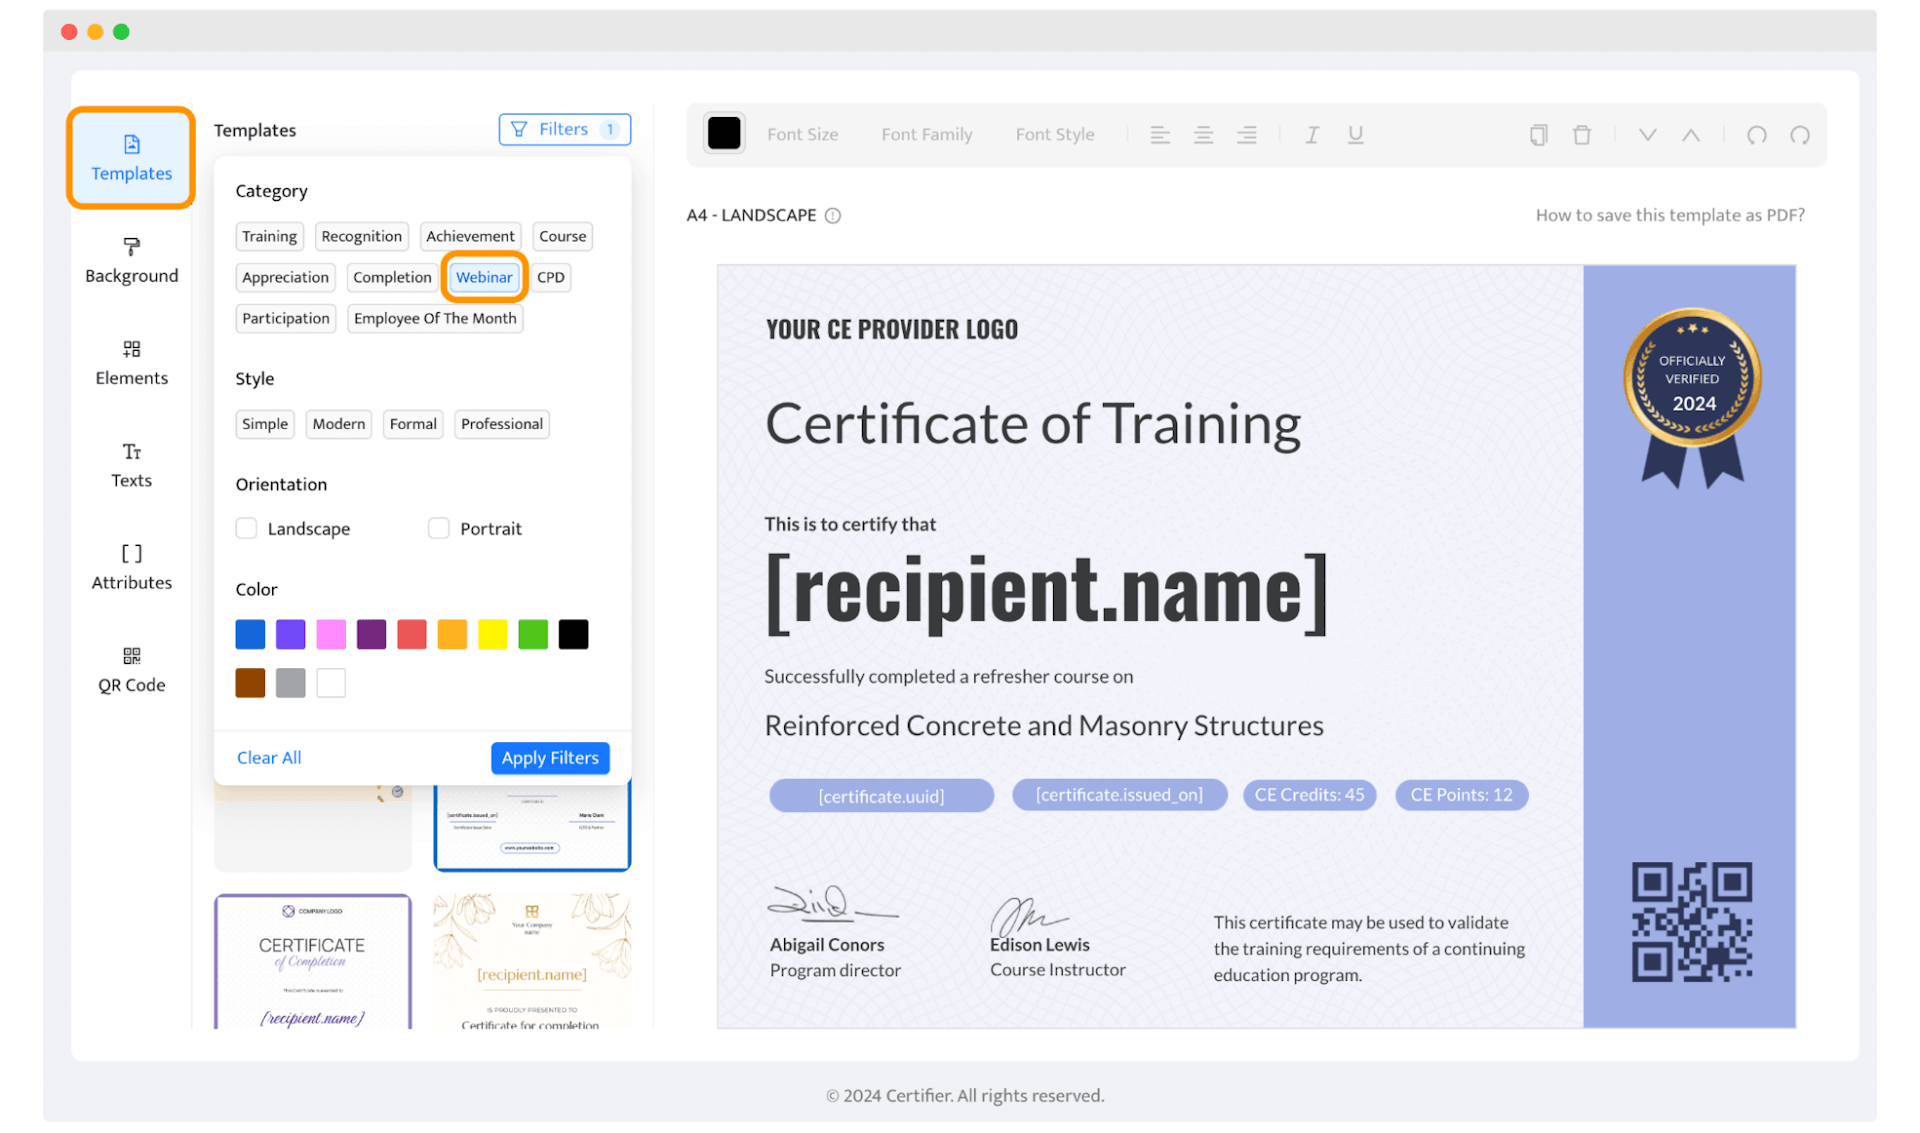 Zoom webinar certificate design within the Certifier tool.